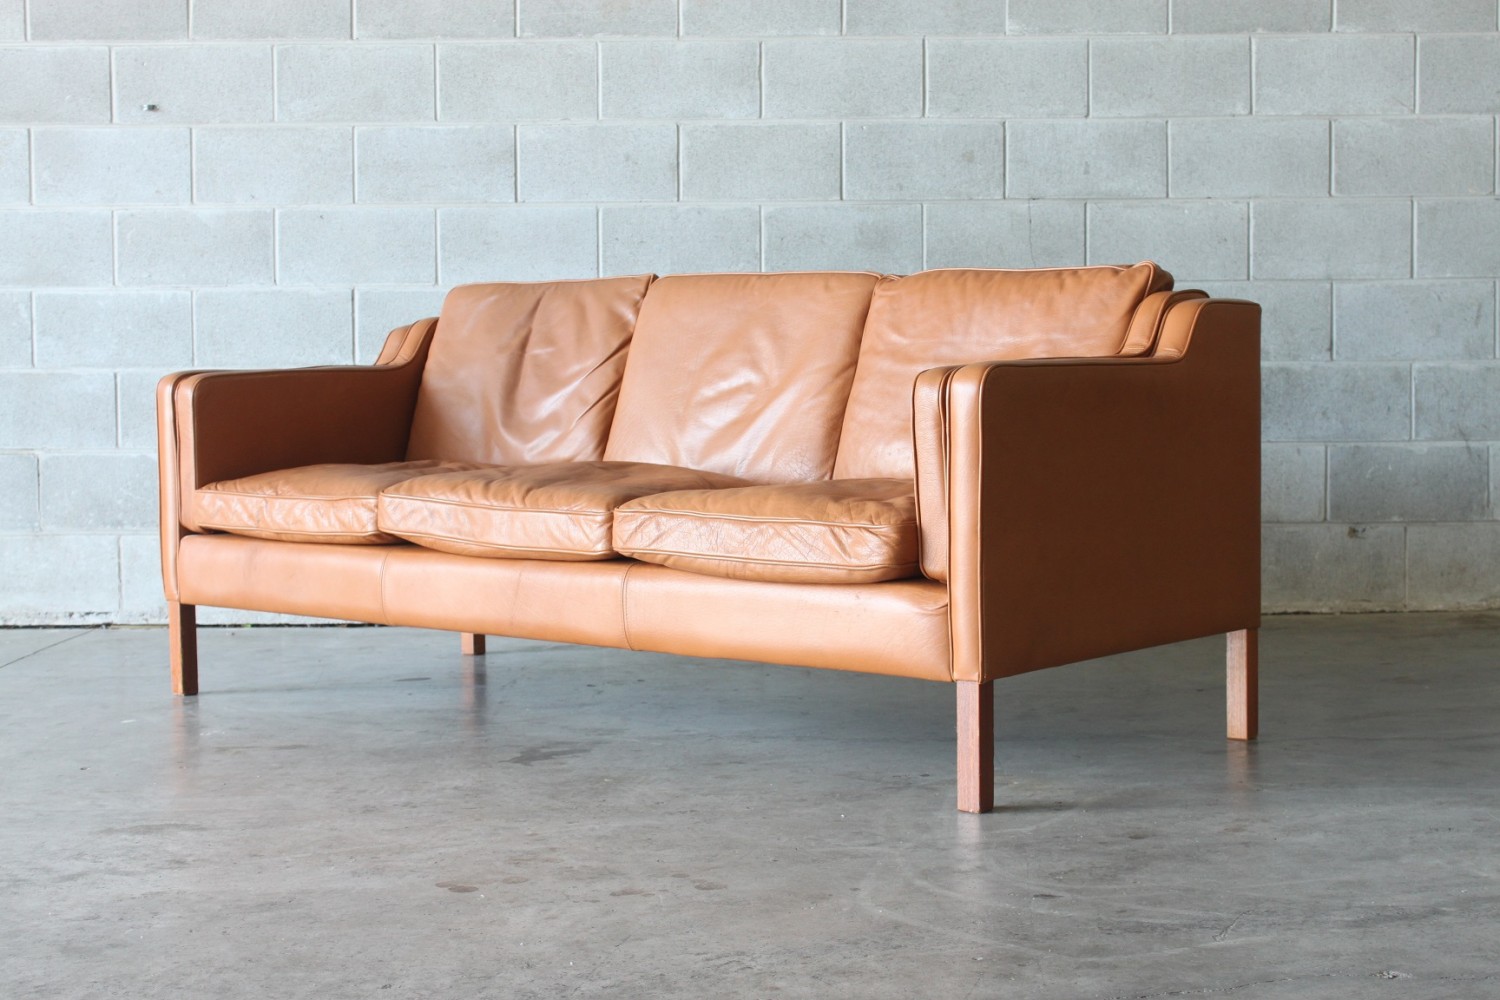 Tan Leather Sofa